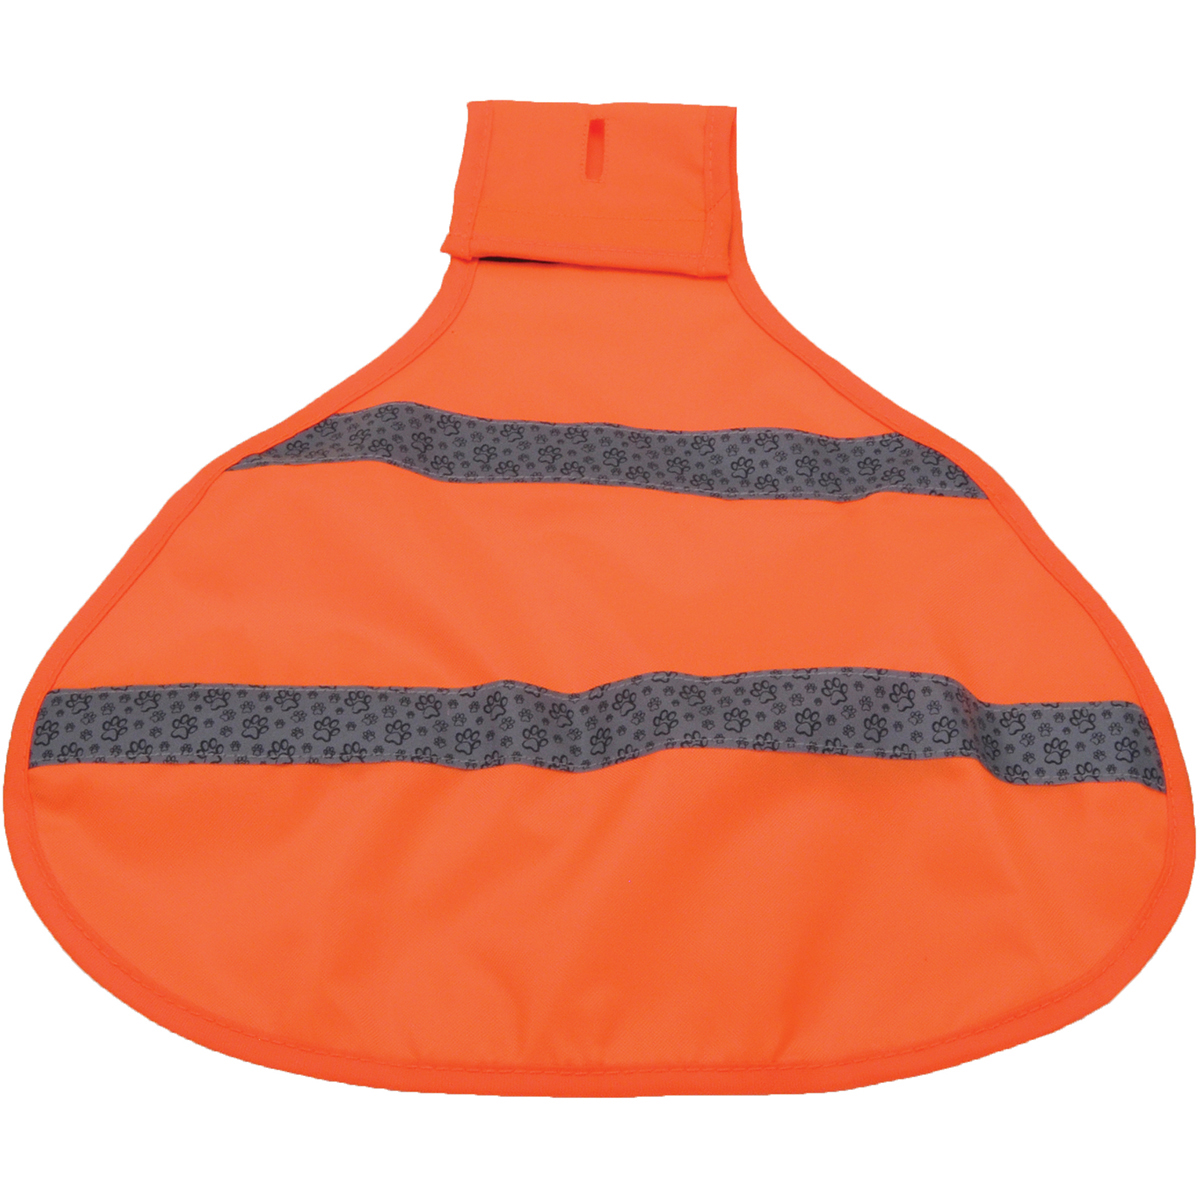 01911nos Reflective Safety Vest, Neon Orange - Small